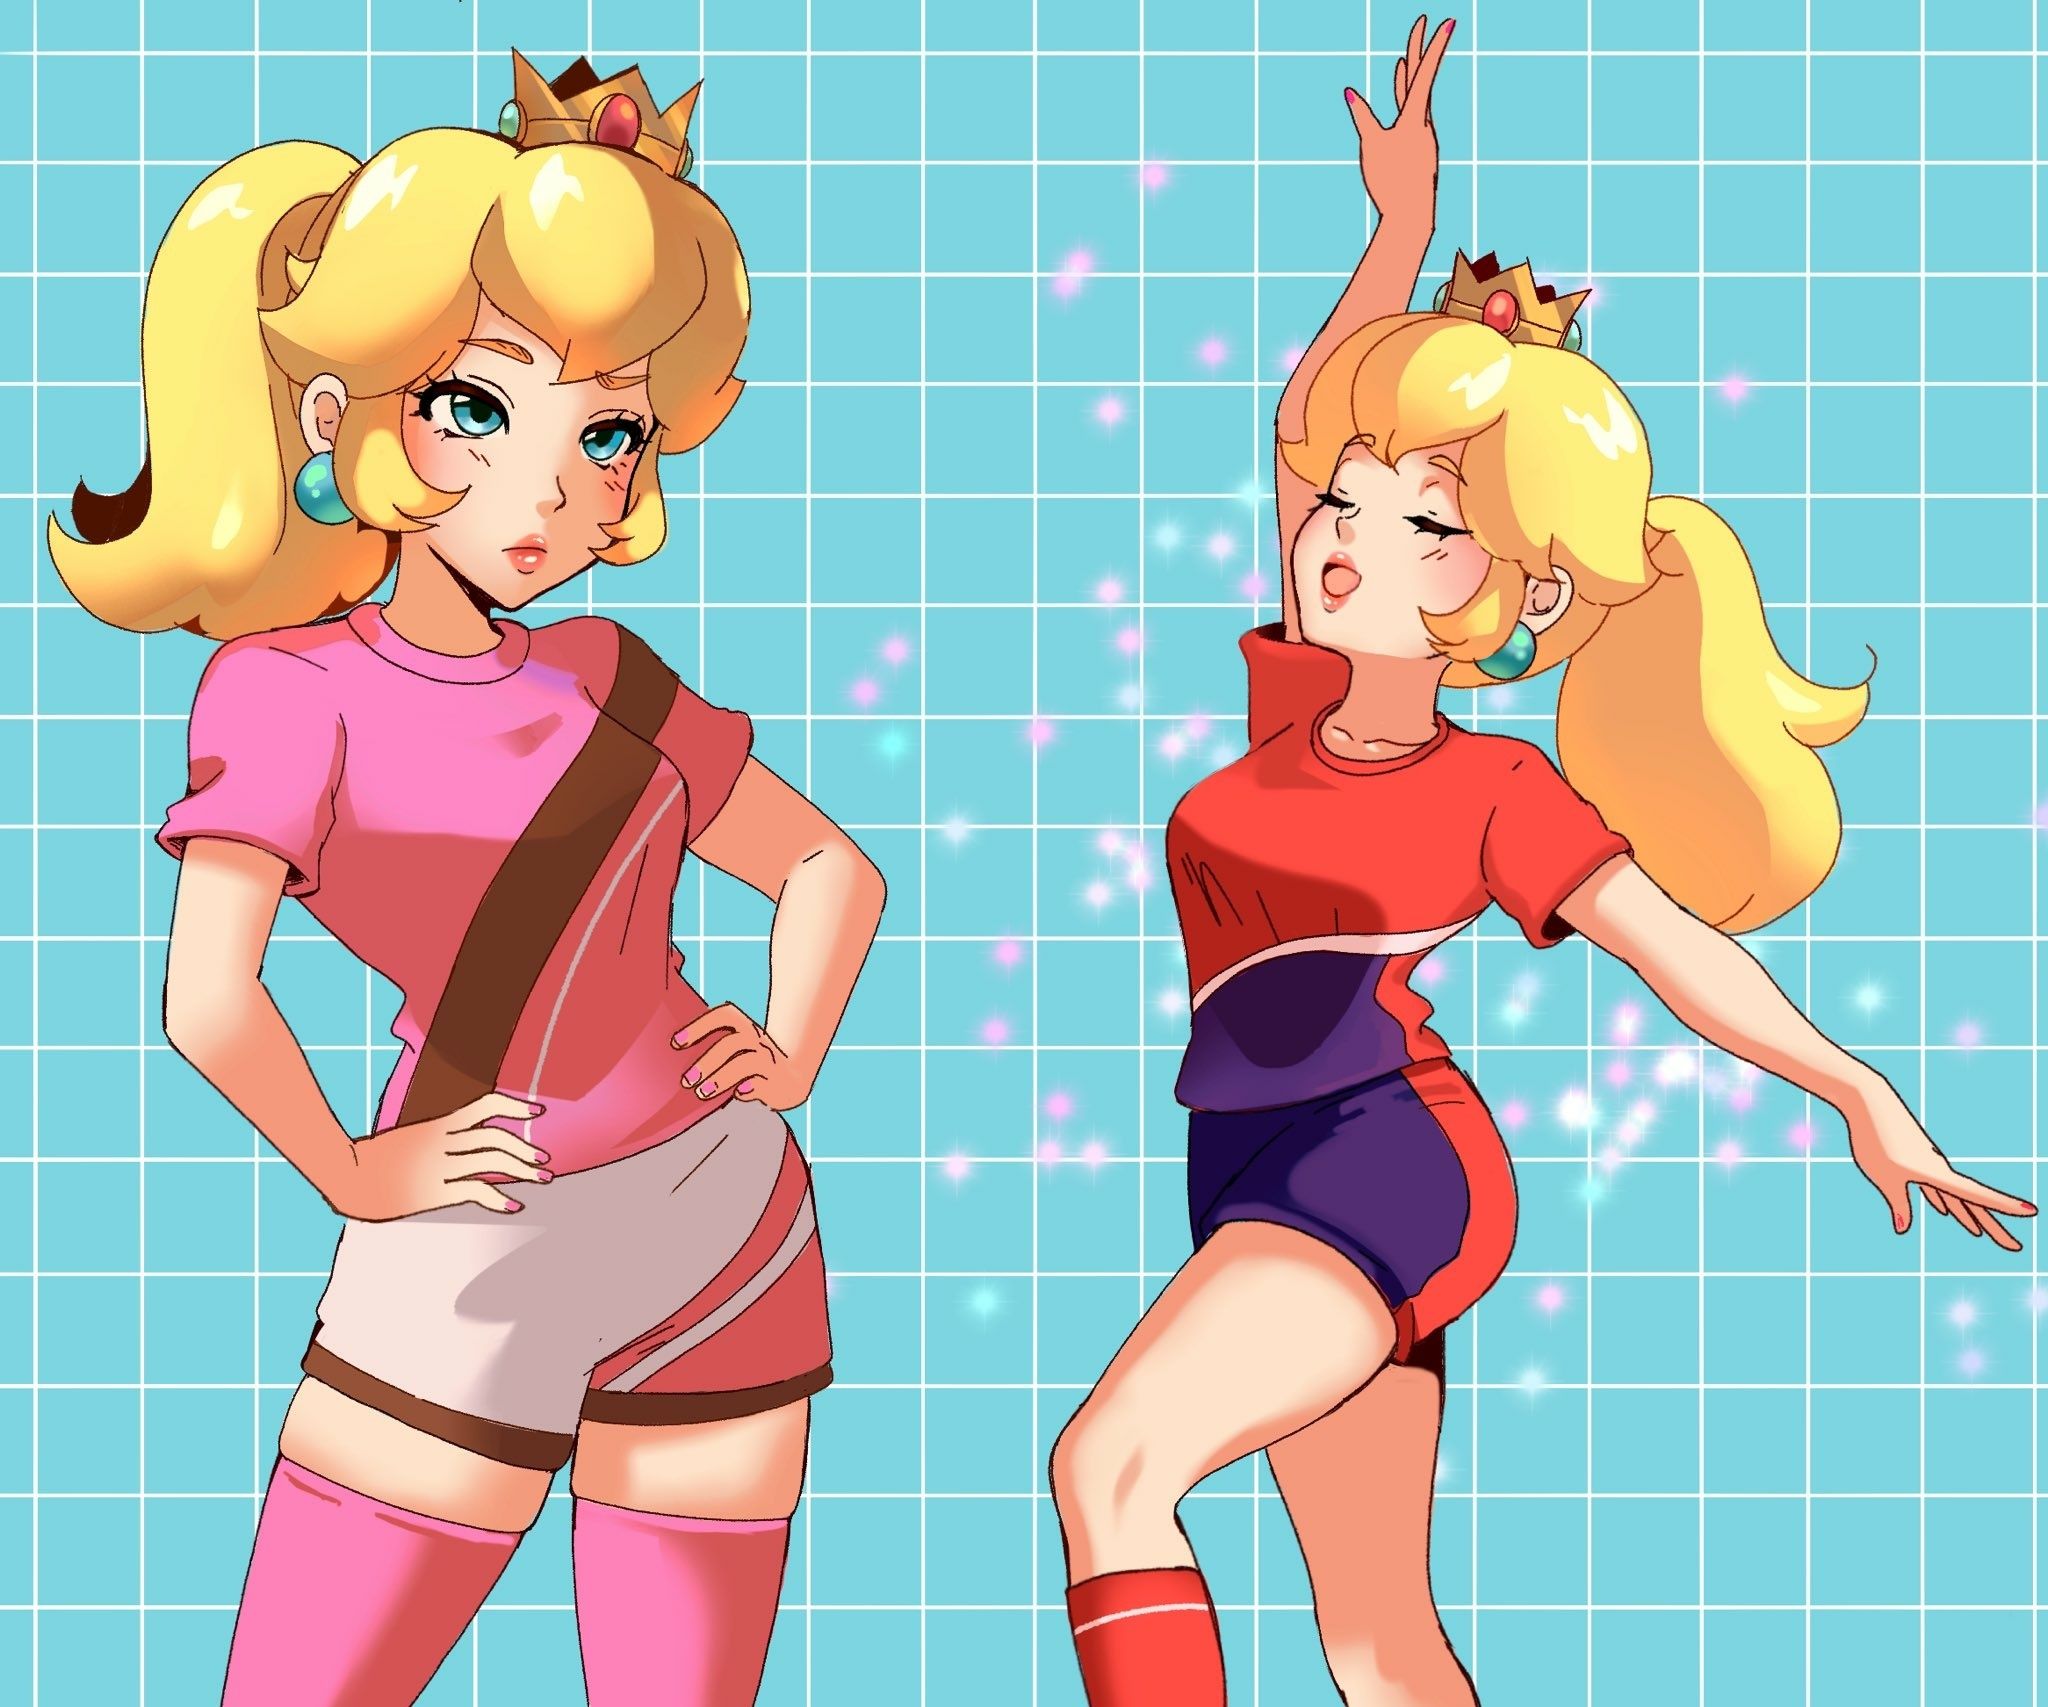 Peach and Daisy in their running outfits - Princess Peach